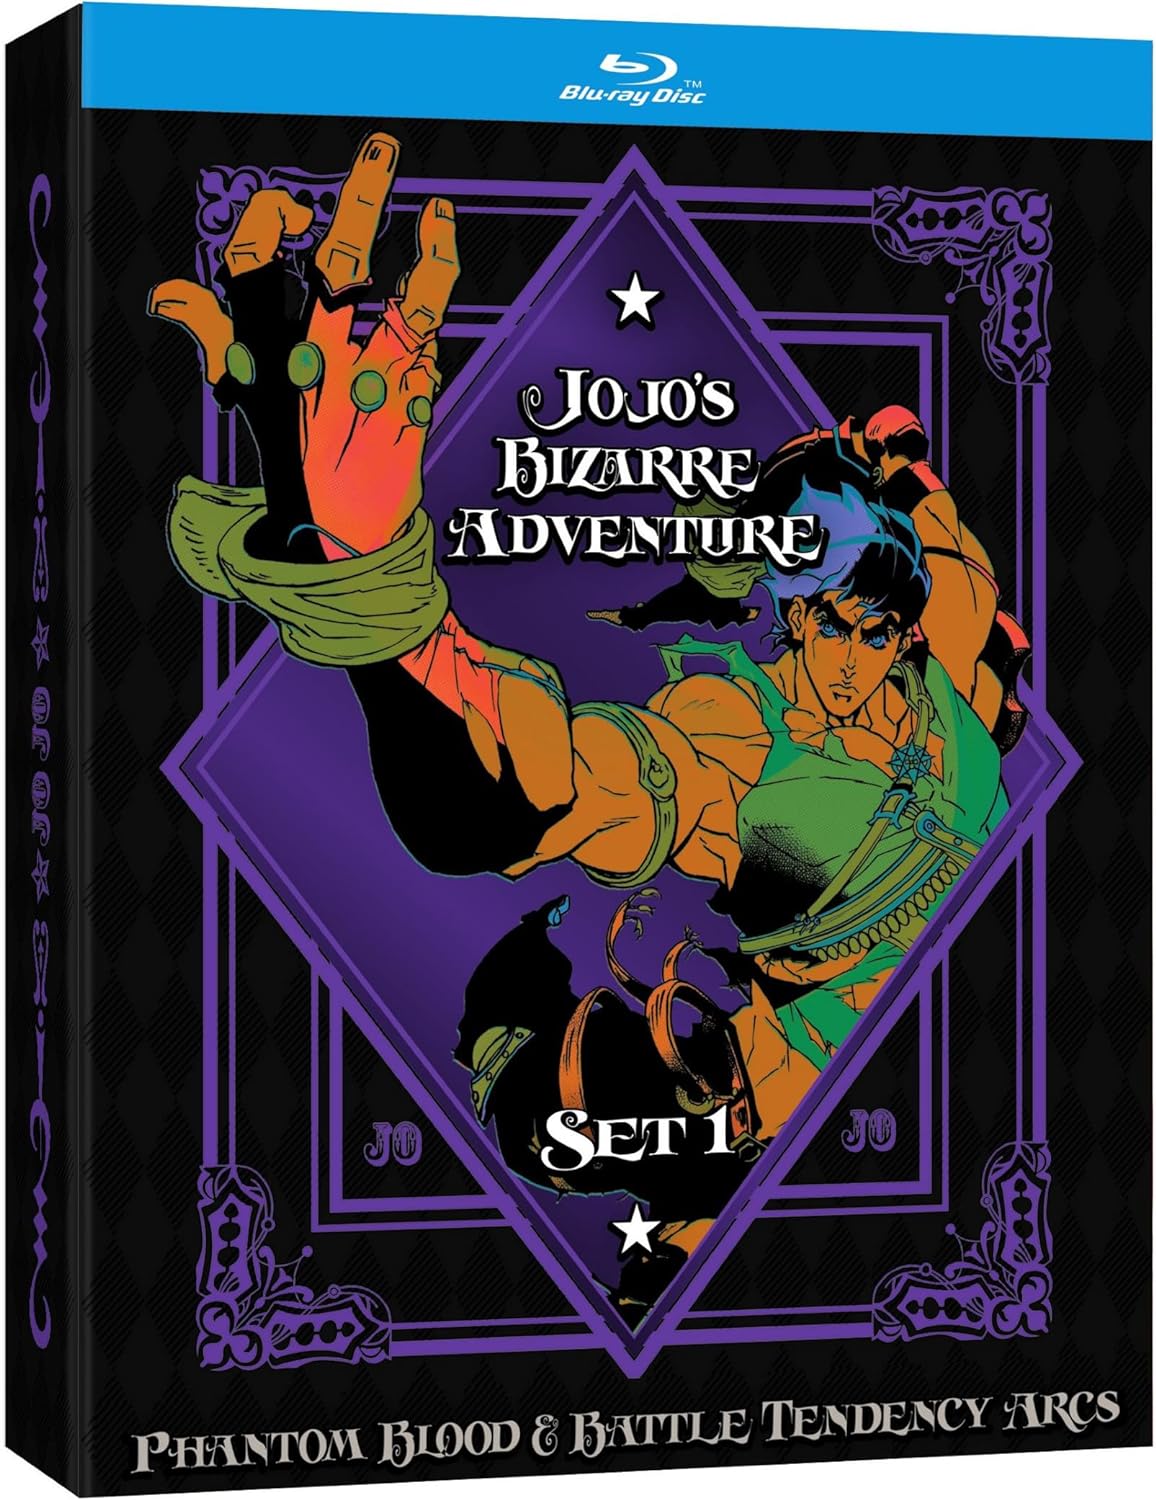 Jojo's Bizarre Adventure: Set 1 Phantom Battle And Blood Tendency Arcs